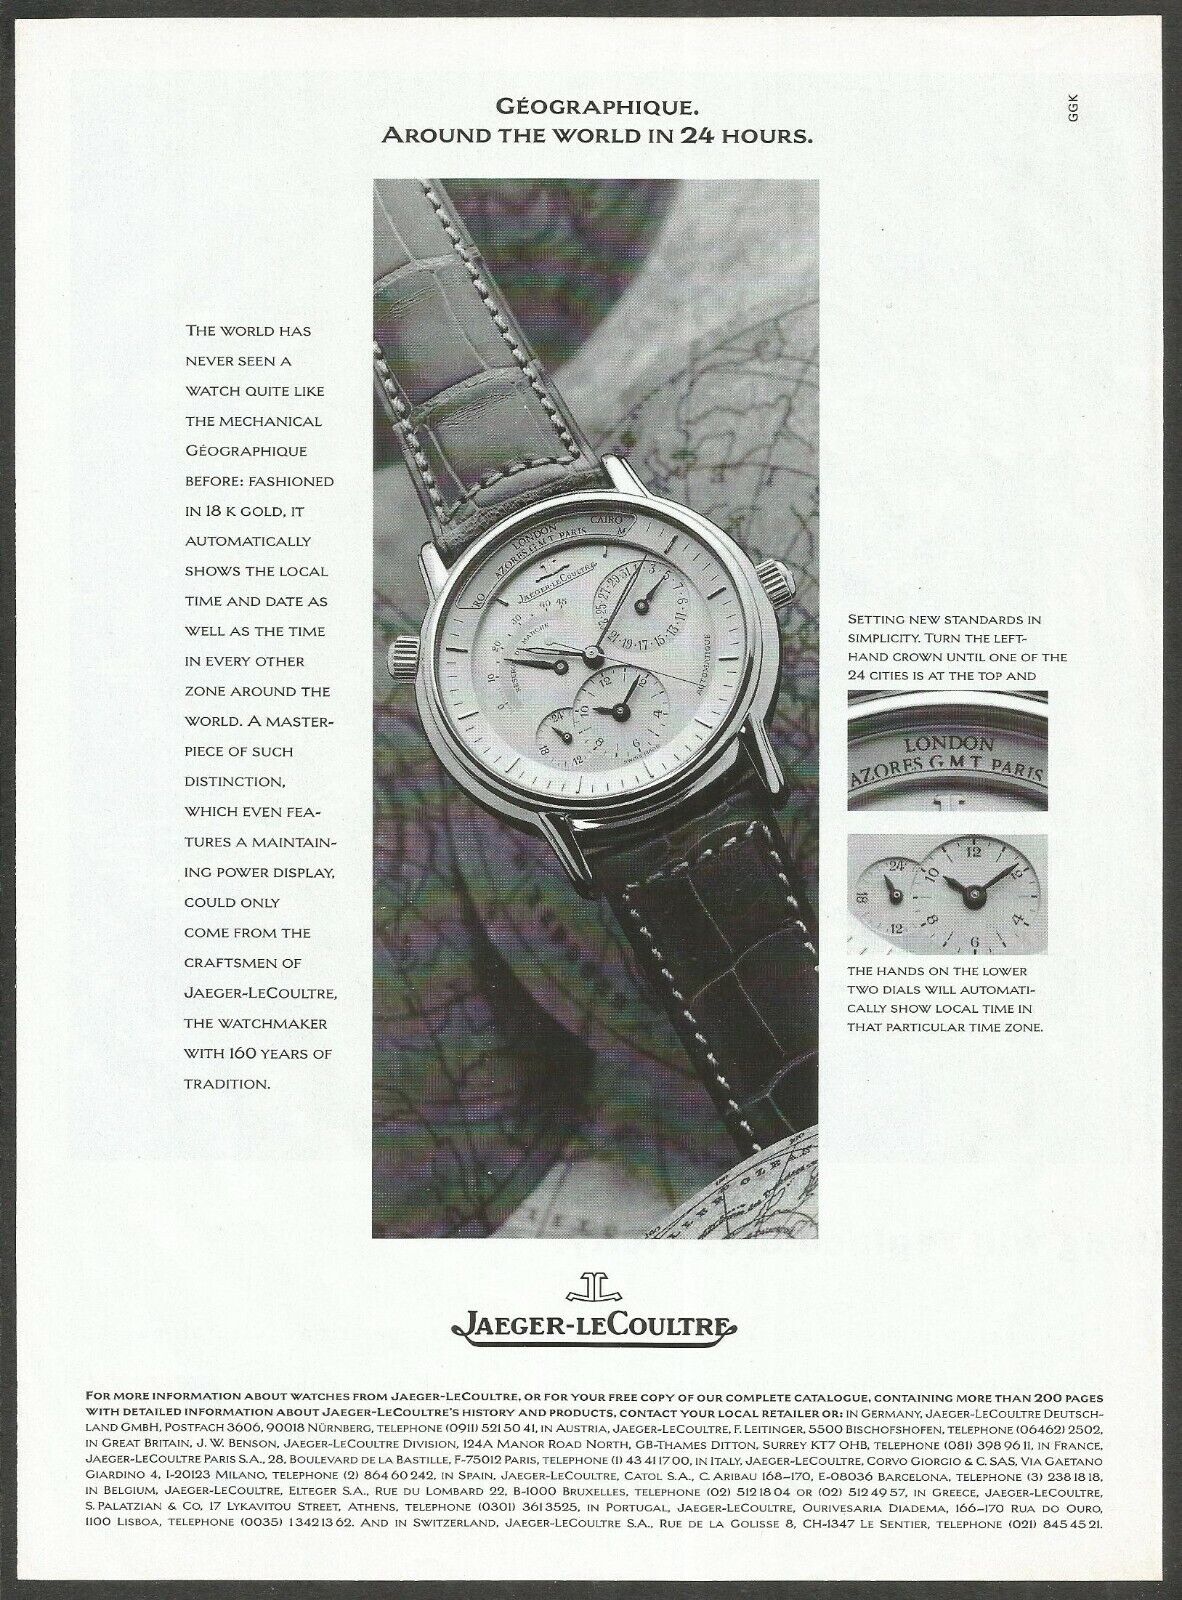 JAEGER-LeCOULTRE GEOGRAPHIQUE watch - 1993 Vintage Print Ad